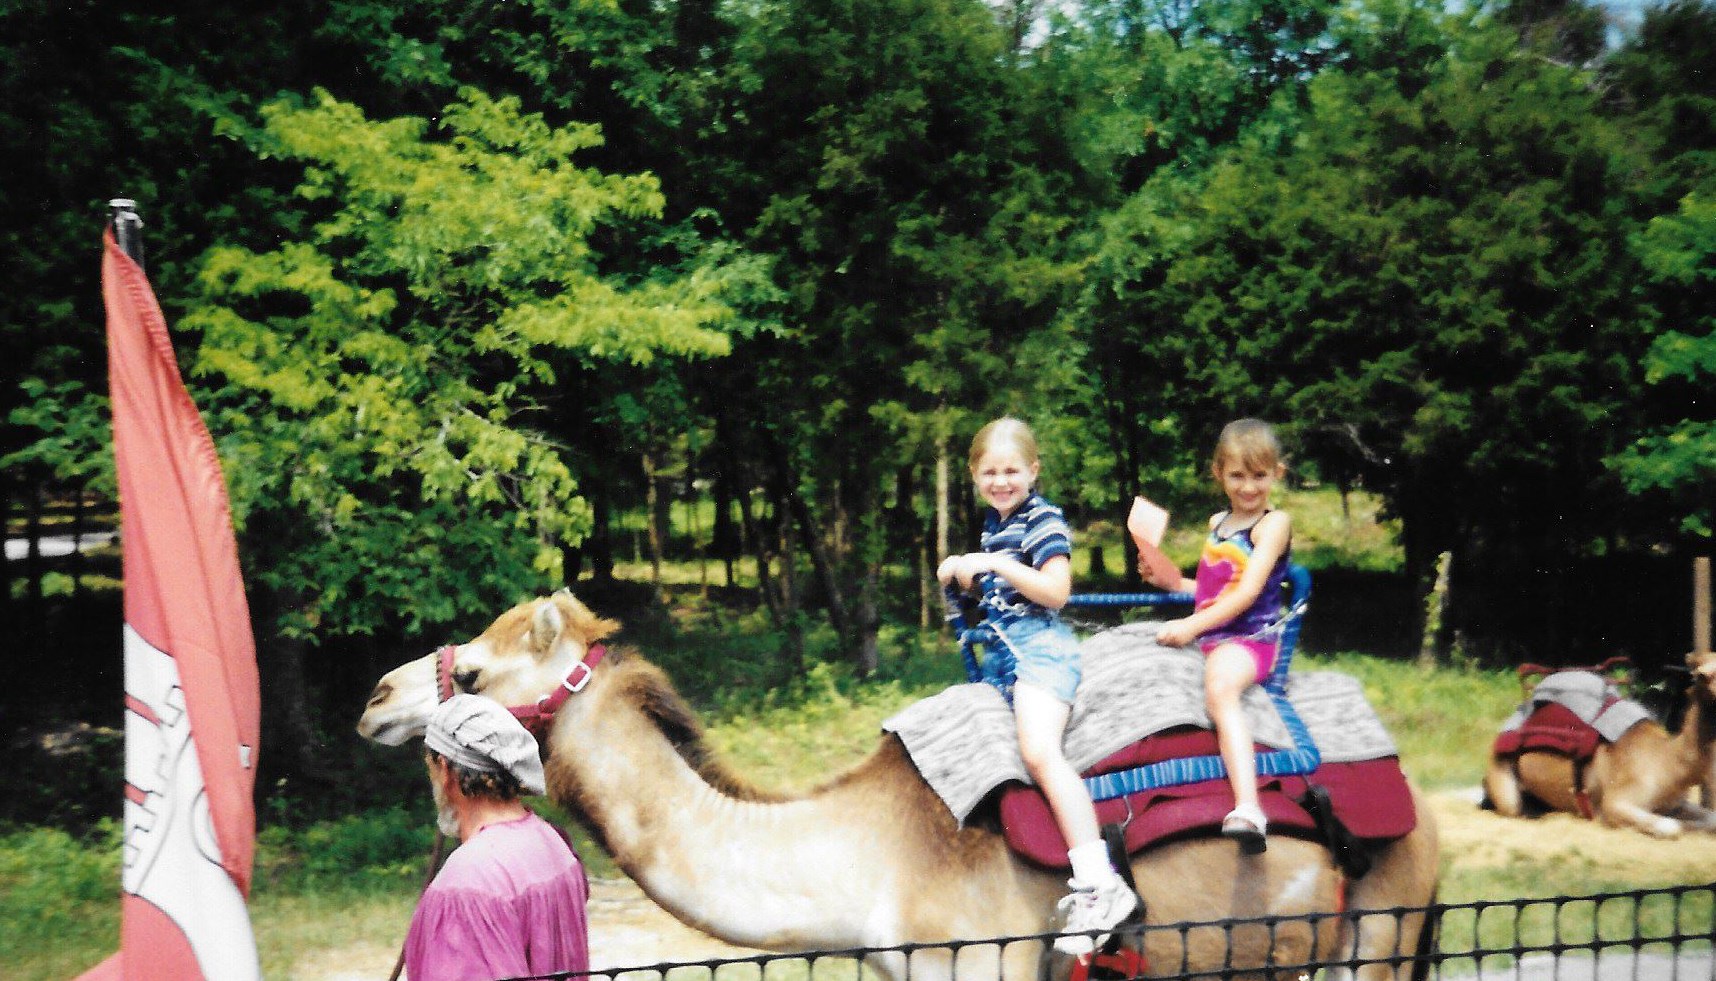 Taylor and Sons en Plastique camel ride. 